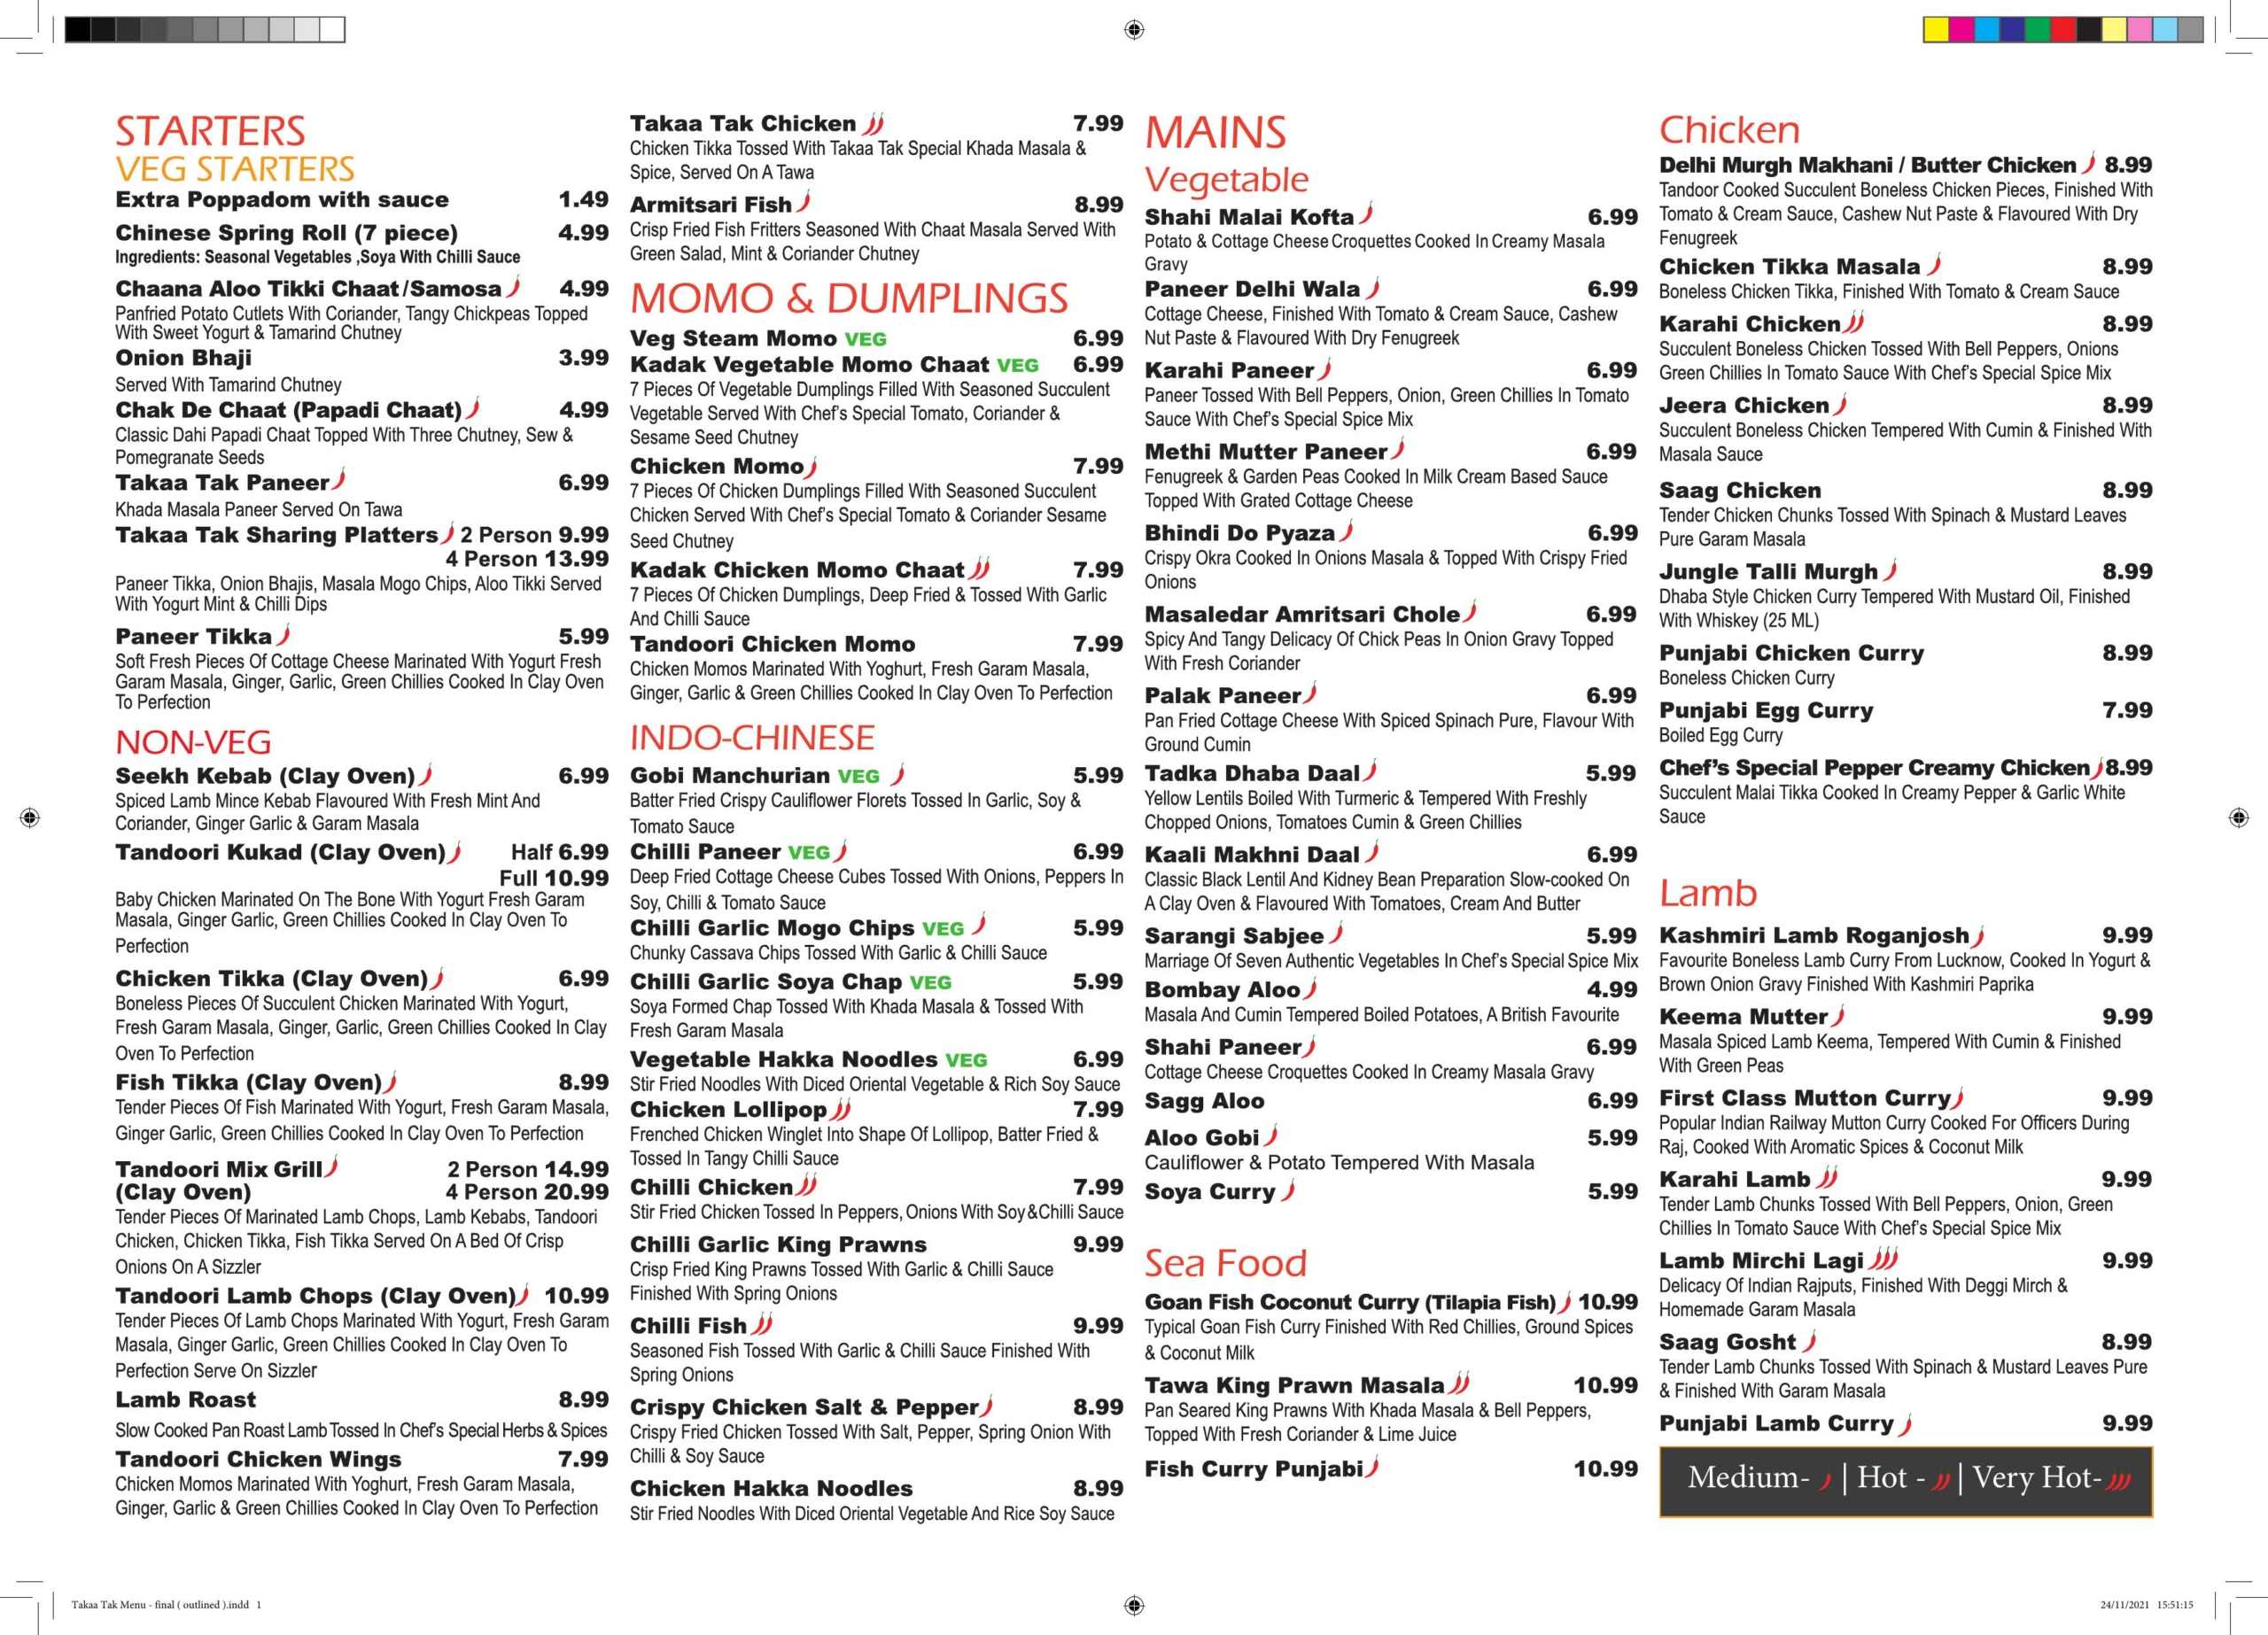 takaa tak Indian & Indo-Chinese menu - main menu